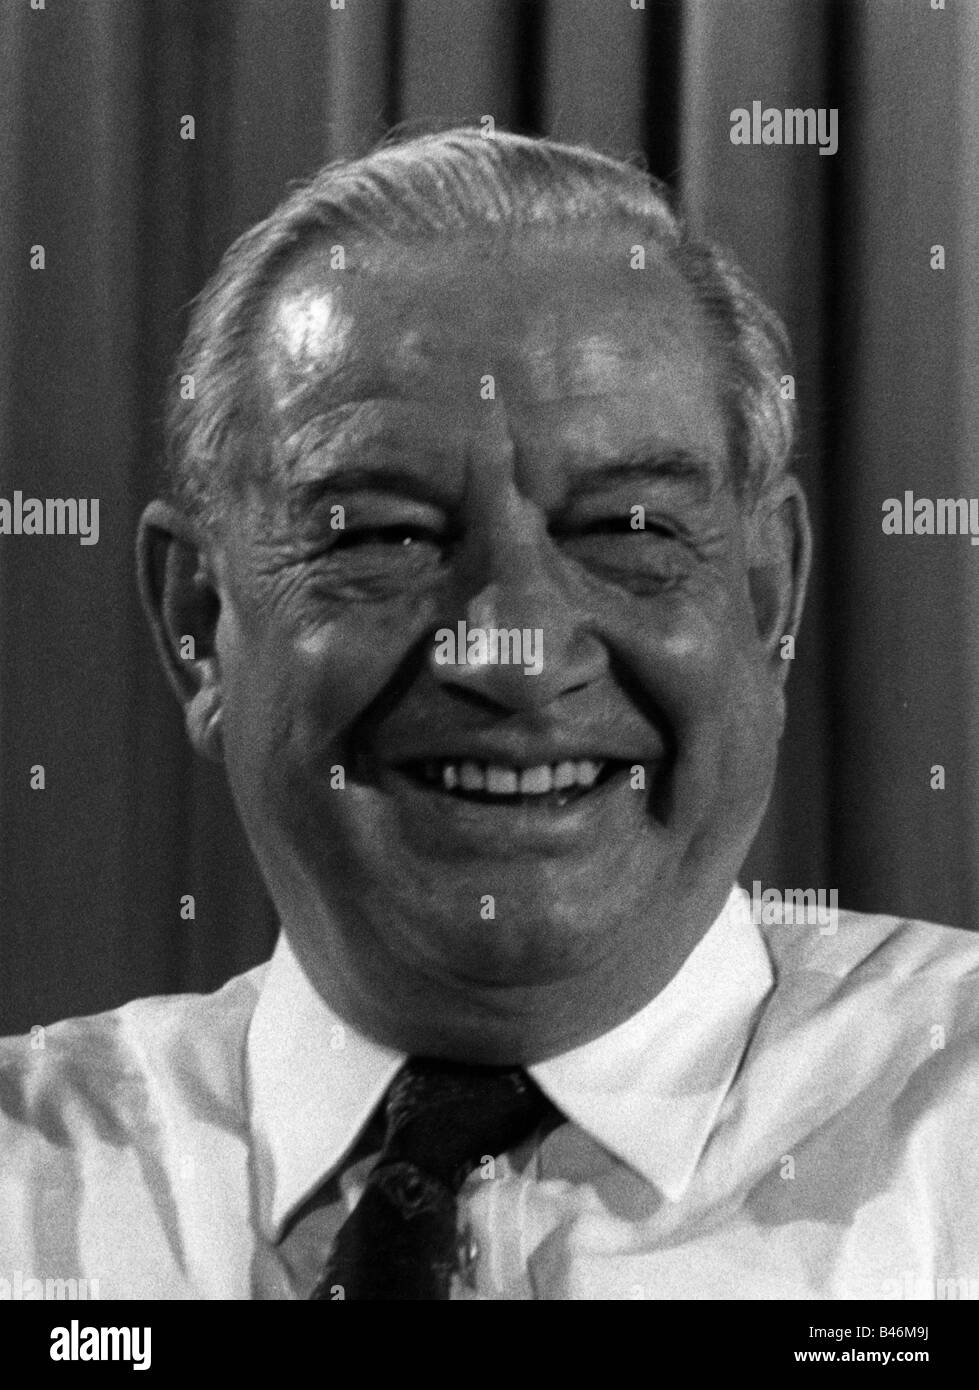 Goppel, Alfons, 1.10.1905 - 24 12.1991, German politician (CSU), Prime Minister of Bavaria 11.12.1962 - 7.11.1978, Portrait, 1976, , Stock Photo